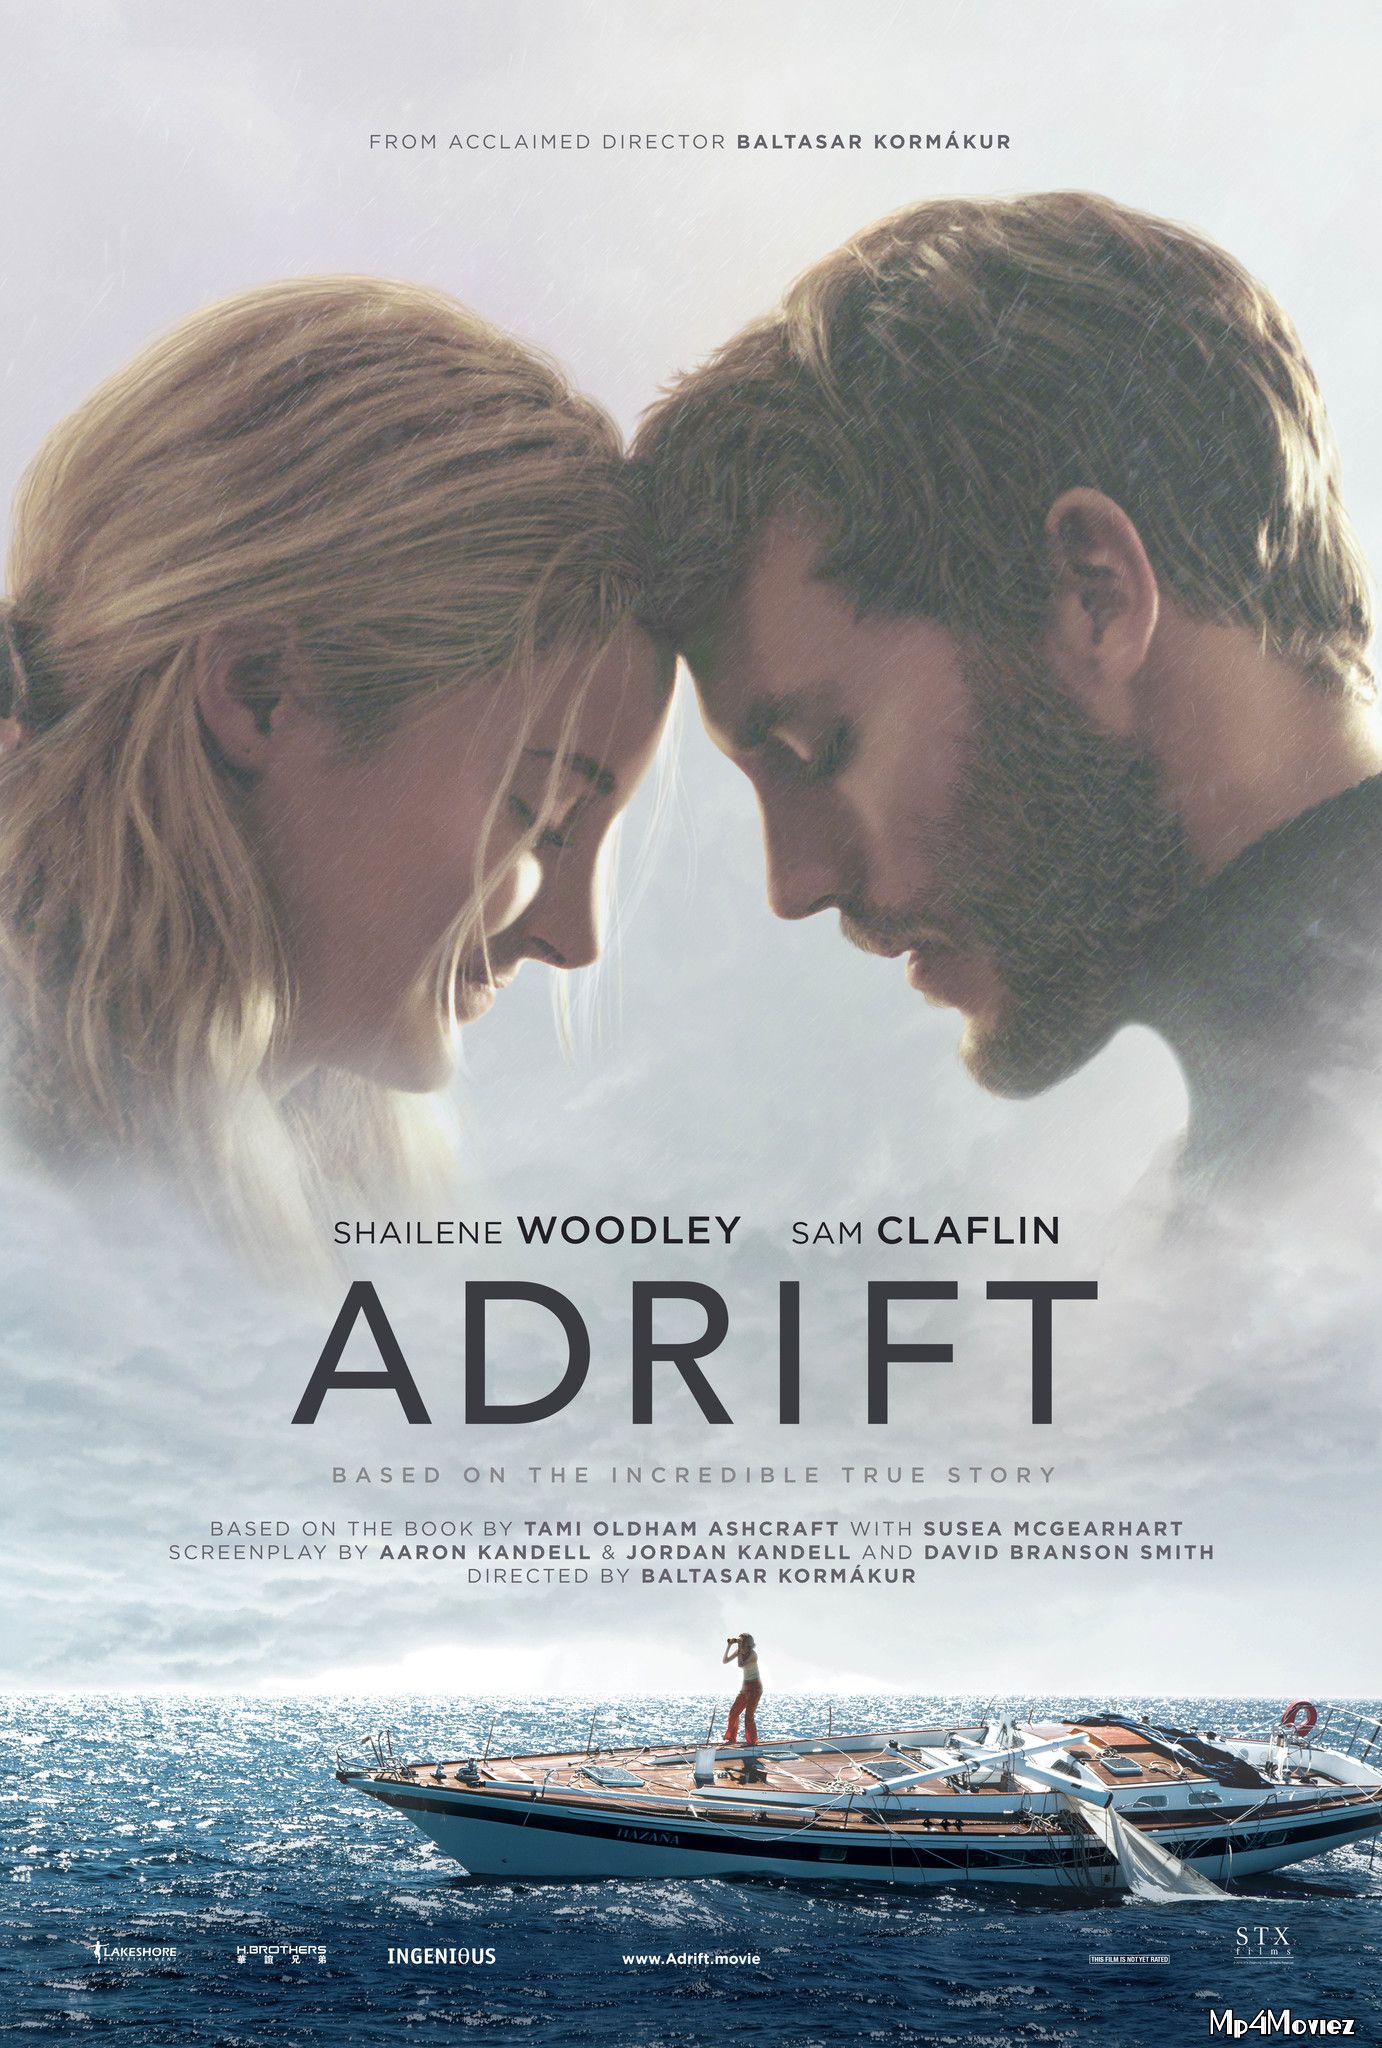 Adrift 2018 Hindi Dubbed Full Movie download full movie